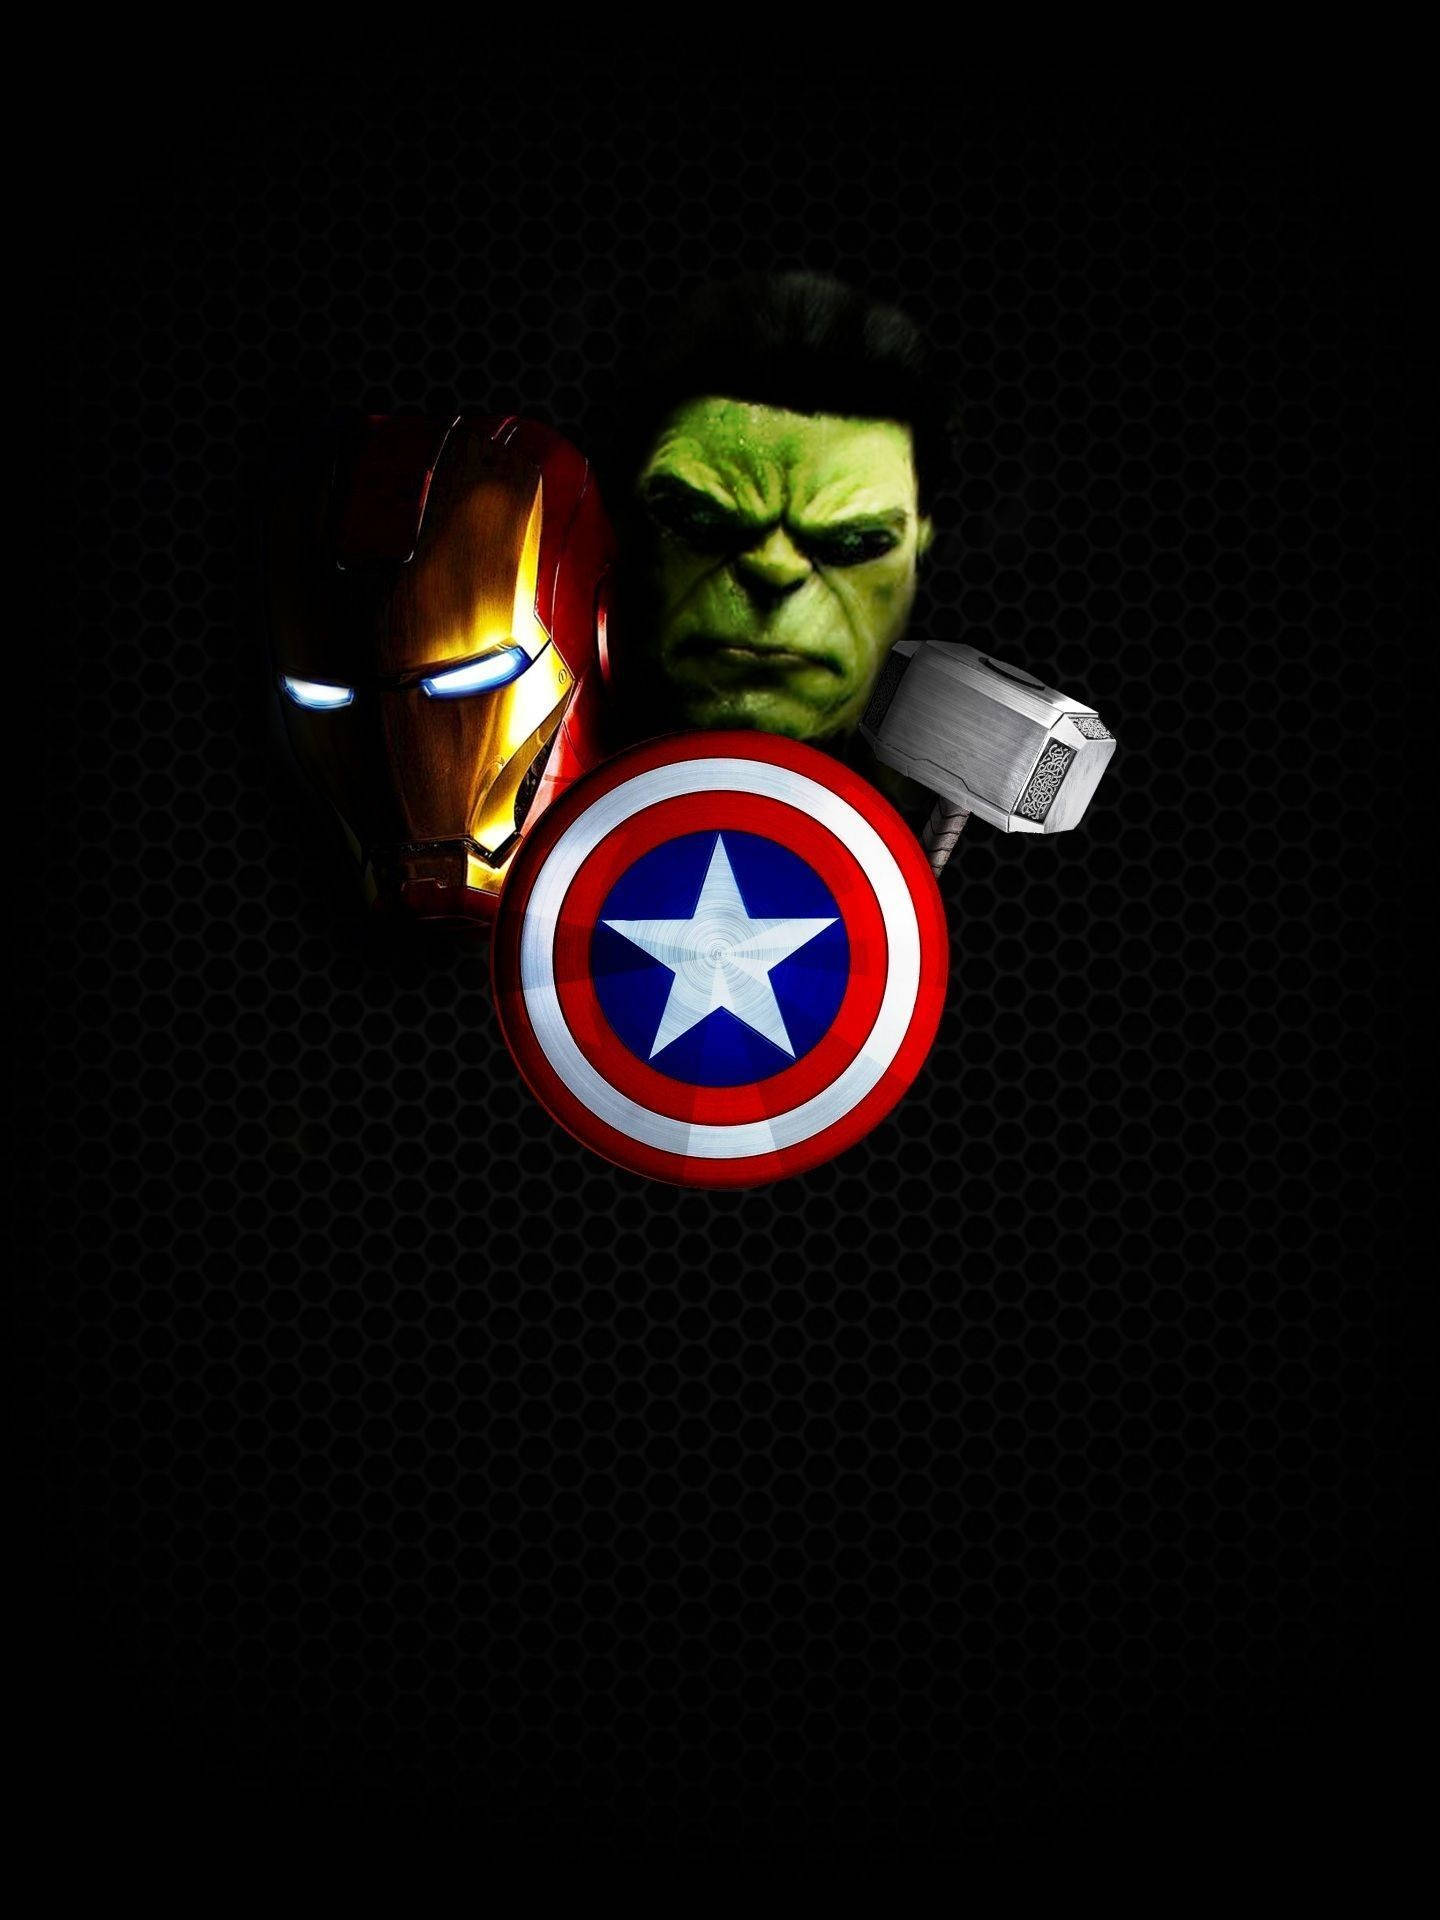 Avengers Power Costume Tumblr Iphone Background